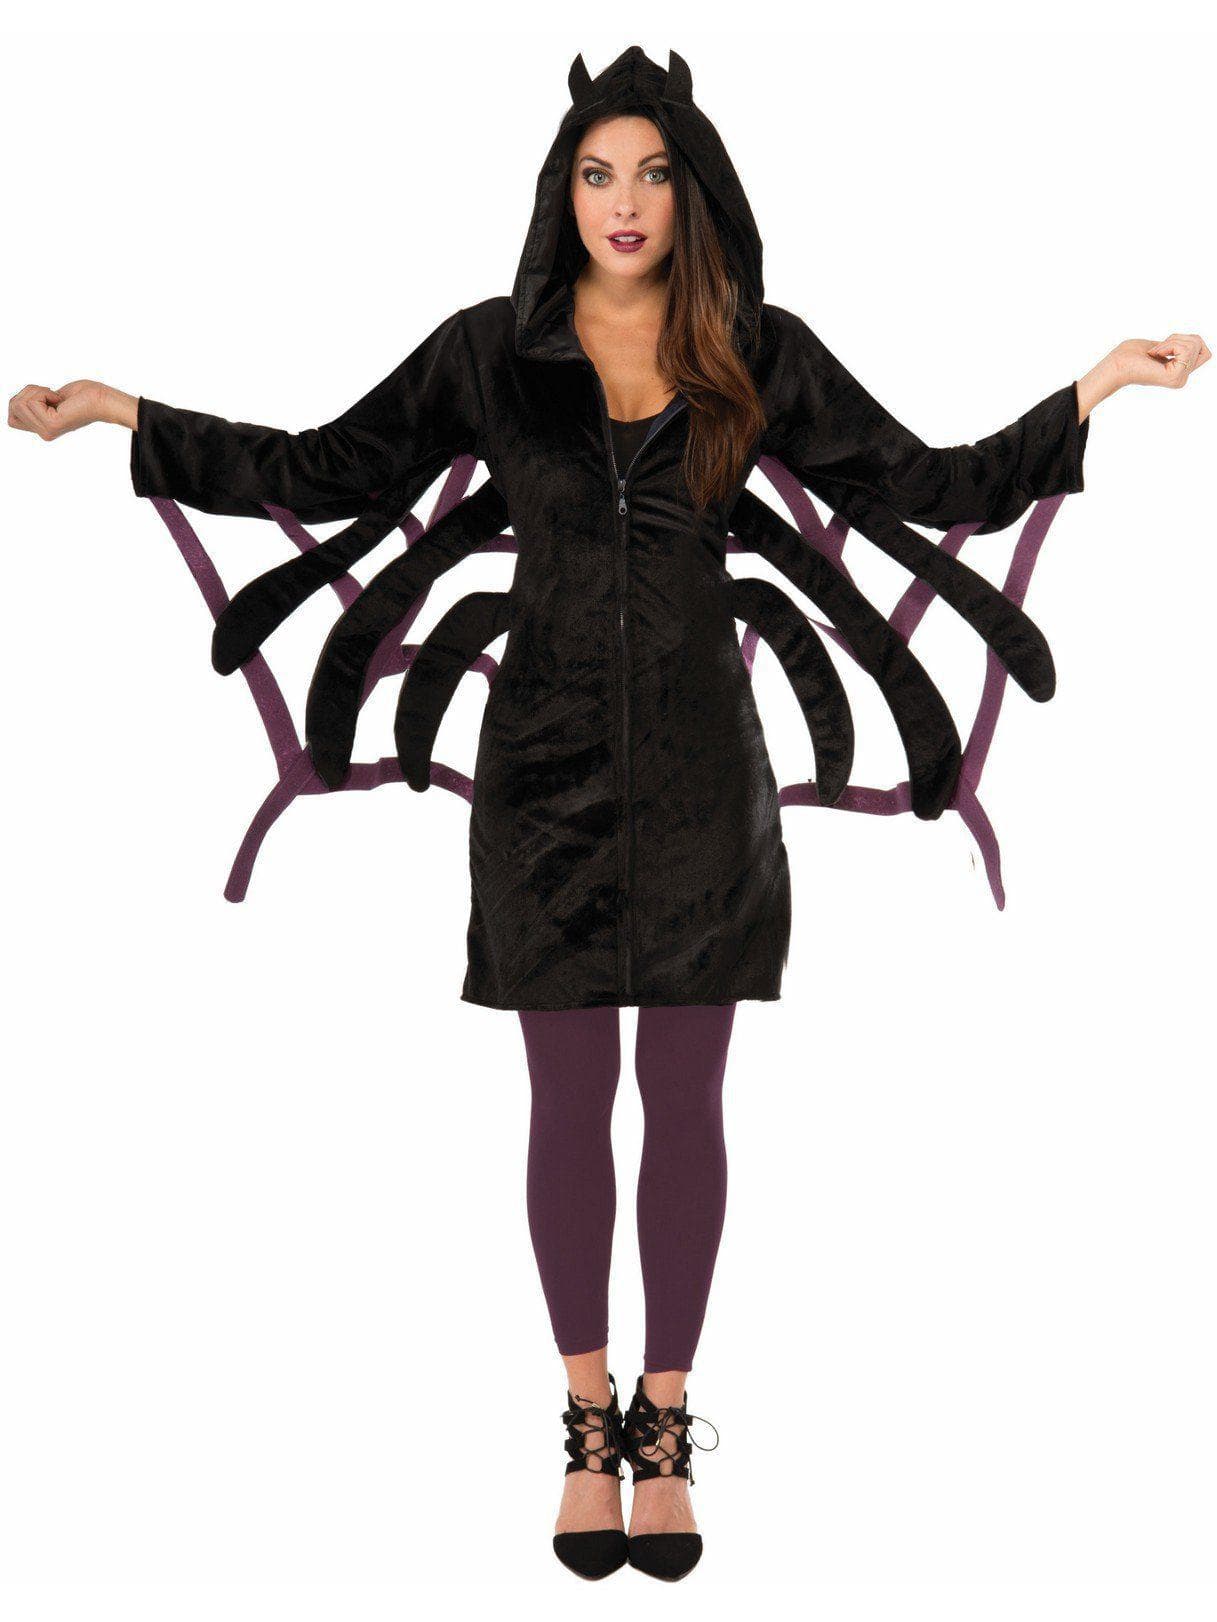 Adult Hoodie Spider Costume - costumes.com